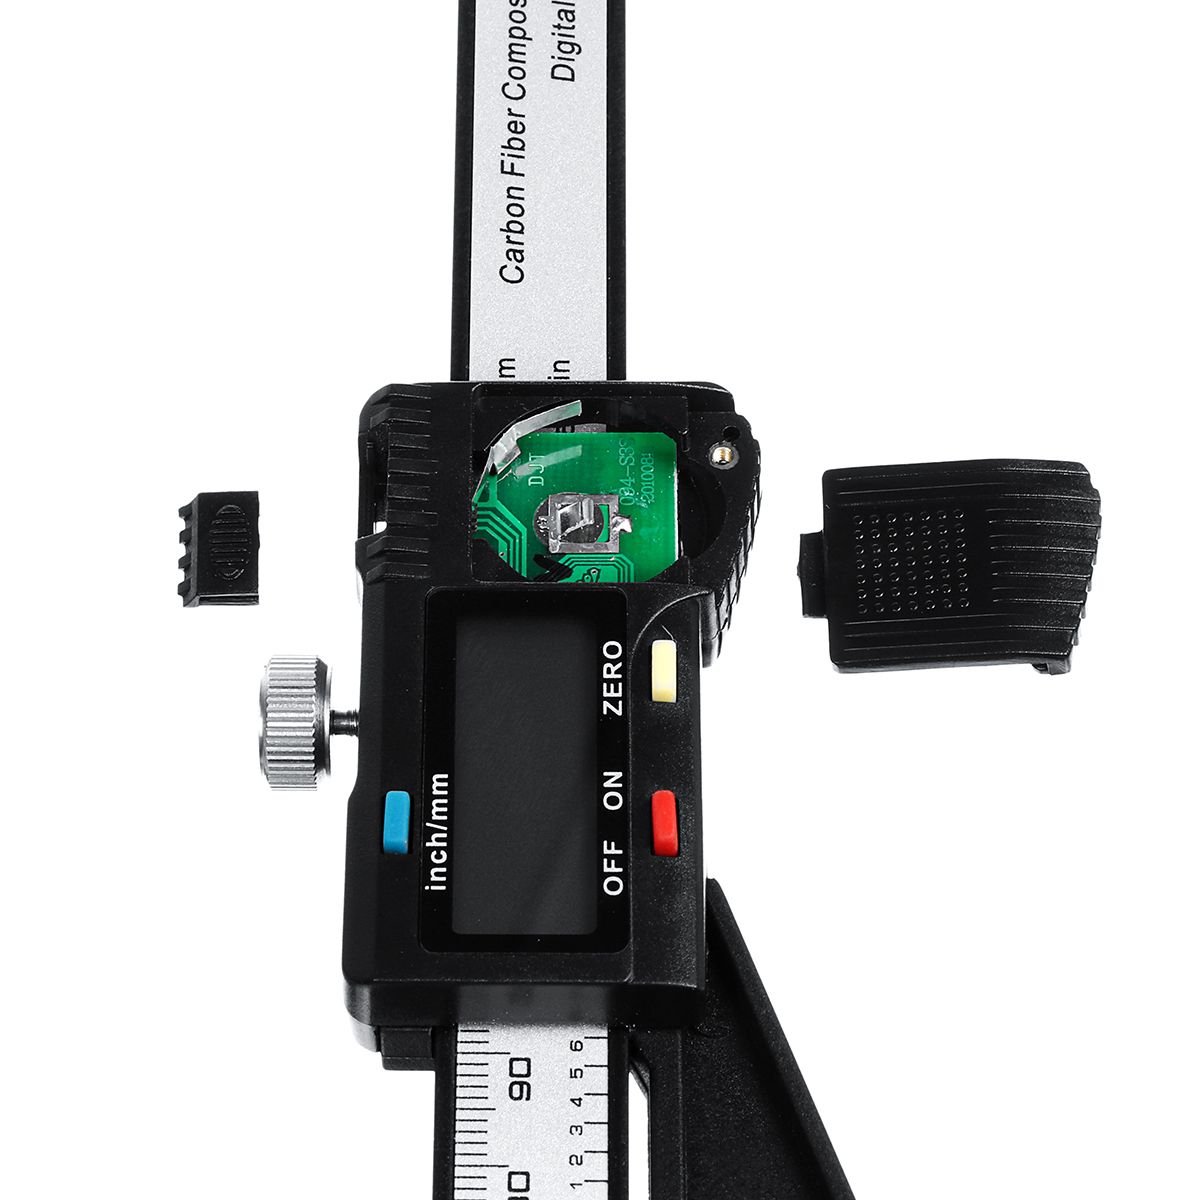 Digital-Height-Gauge-150mm-6-Vernier-Caliper-Micrometer-Electronic-Measurement-1571282